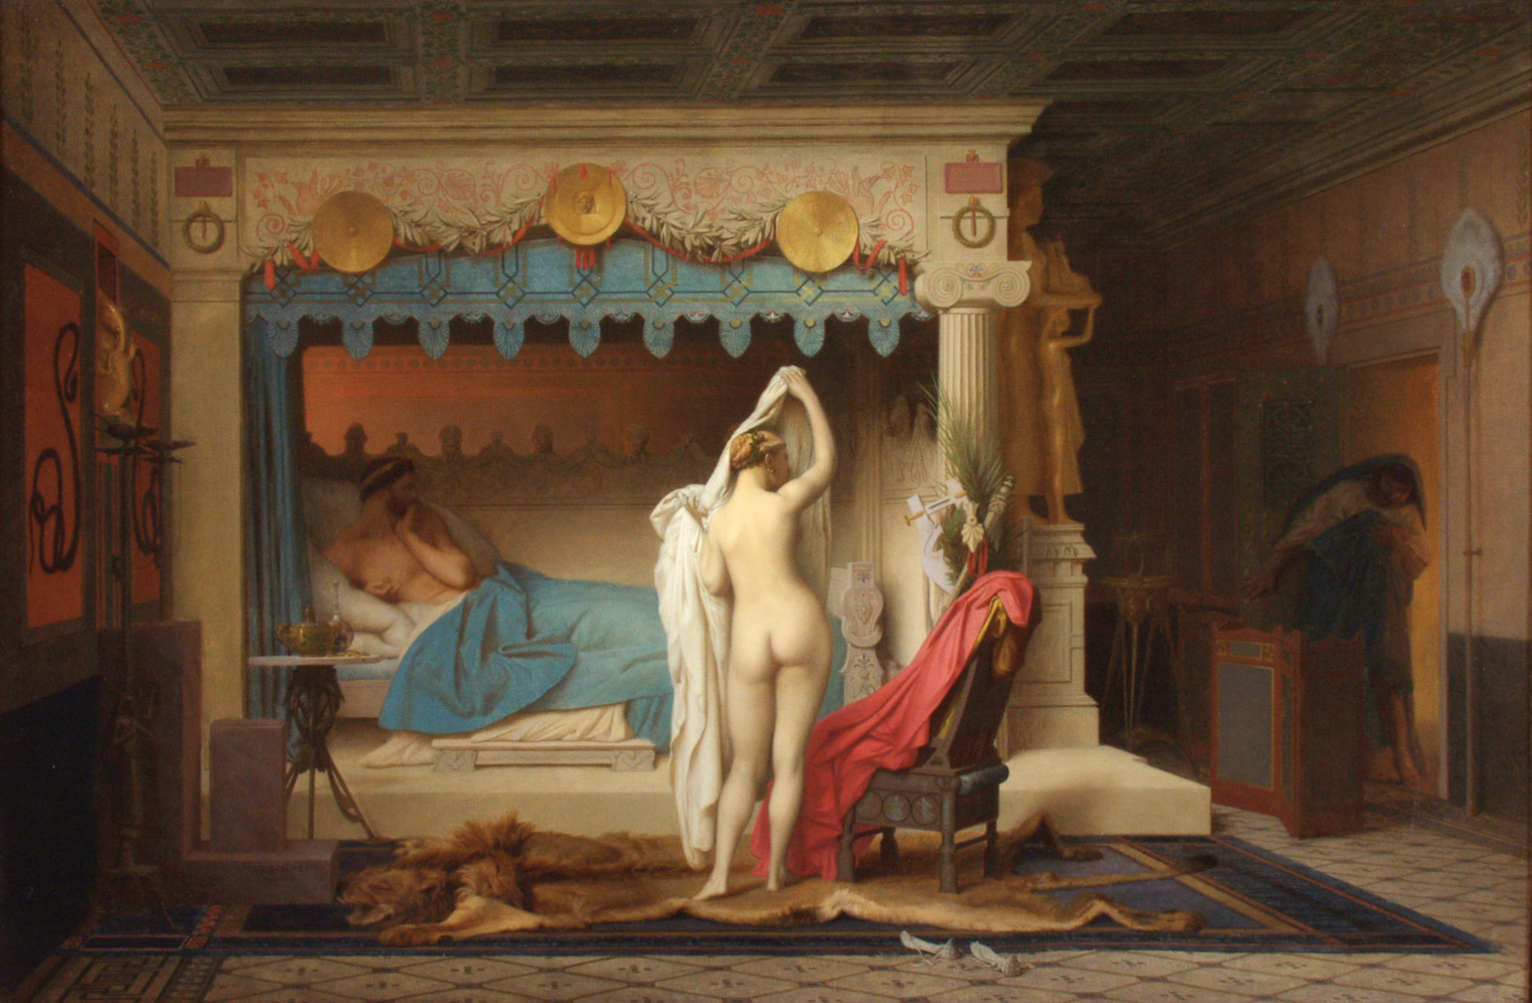 Jerome Jacques-Leon. This unusual east - Nudity, Violence, Longpost, Painting, East, Artist, Egypt, Art